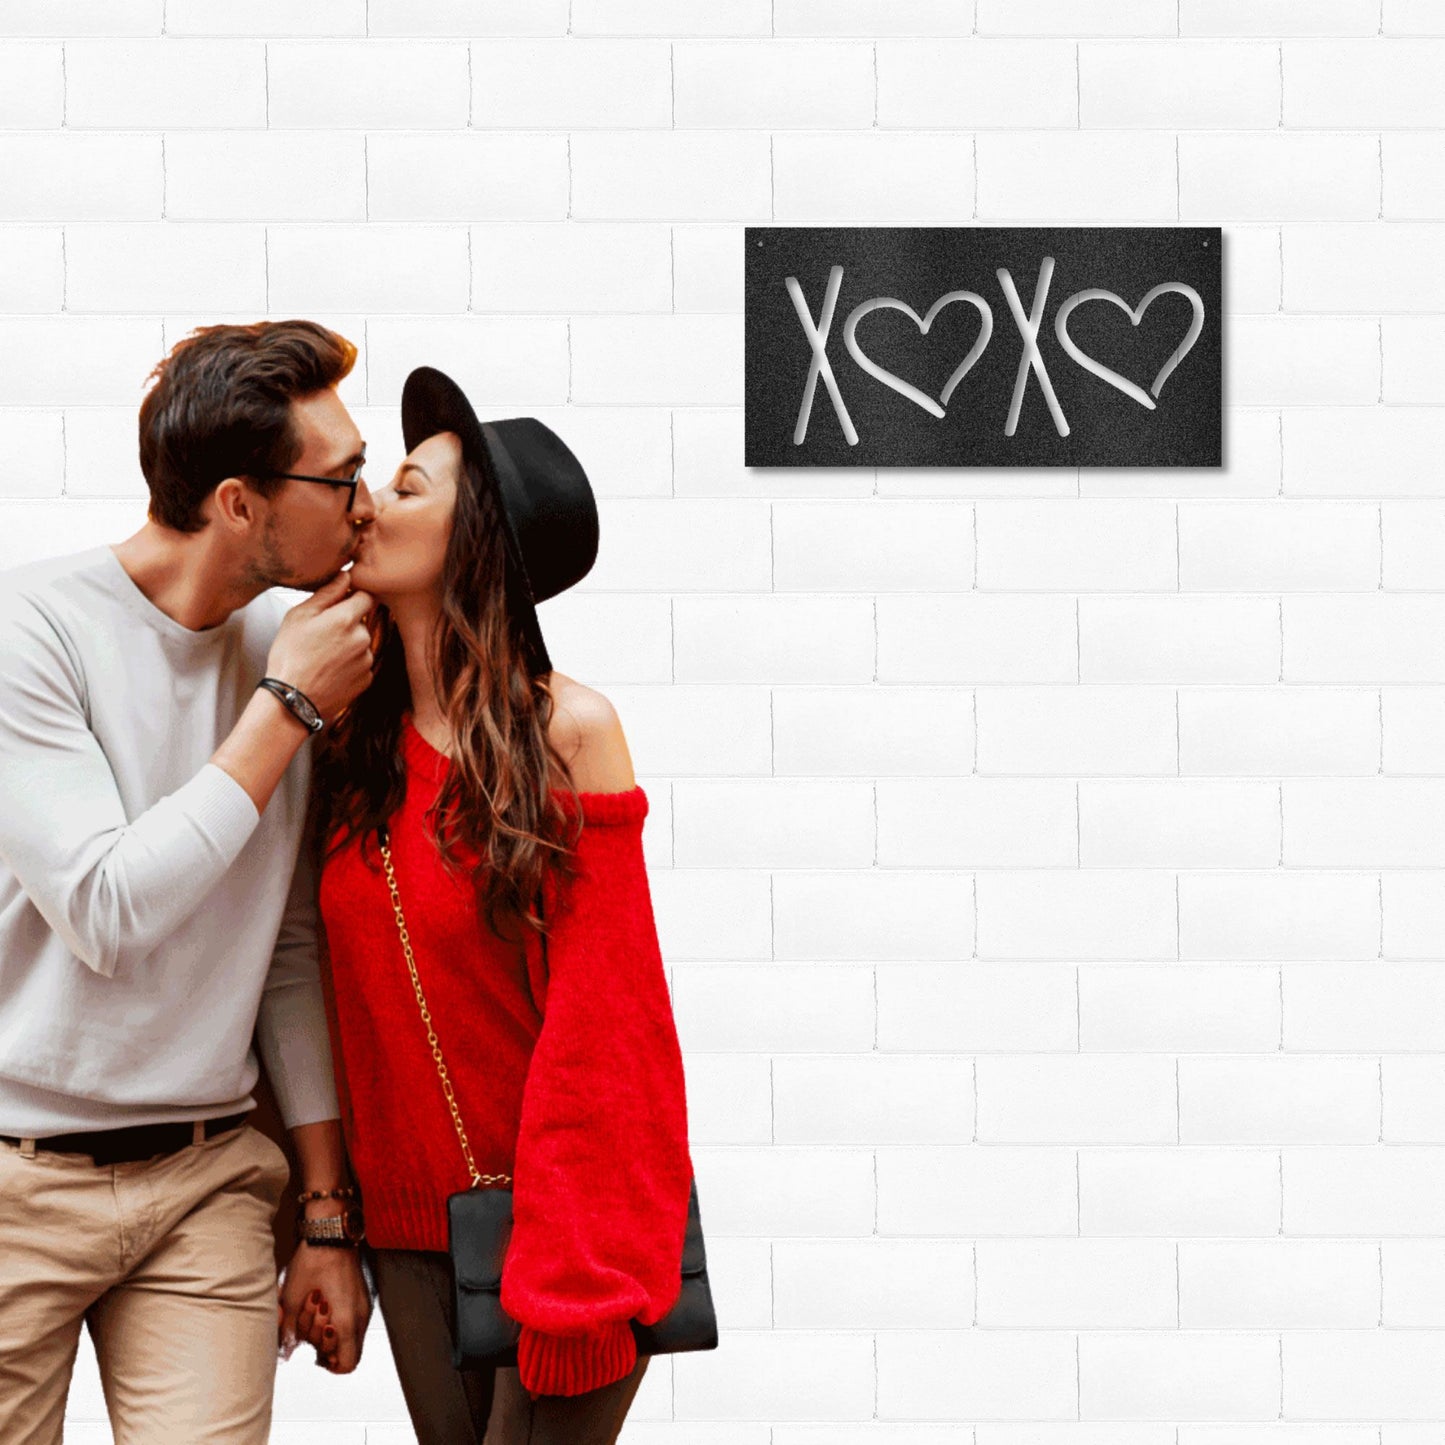 XOXO Hugs and Kisses Indoor Outdoor Steel Wall Sign